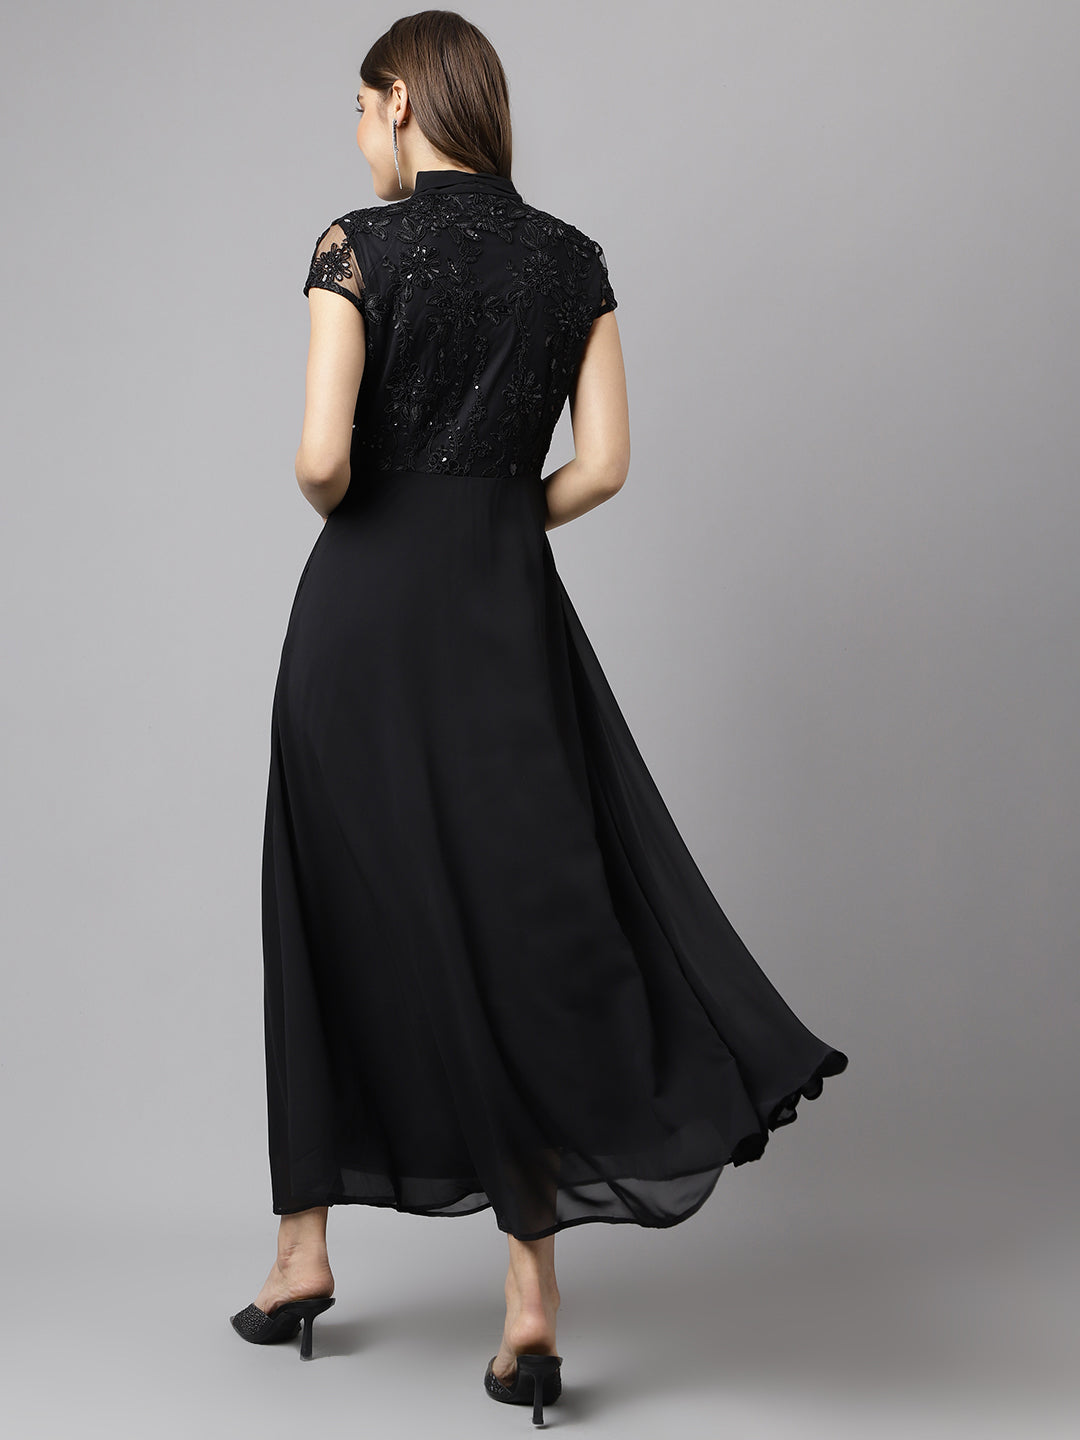 Black Cap Sleeves Solid Sequin Dress